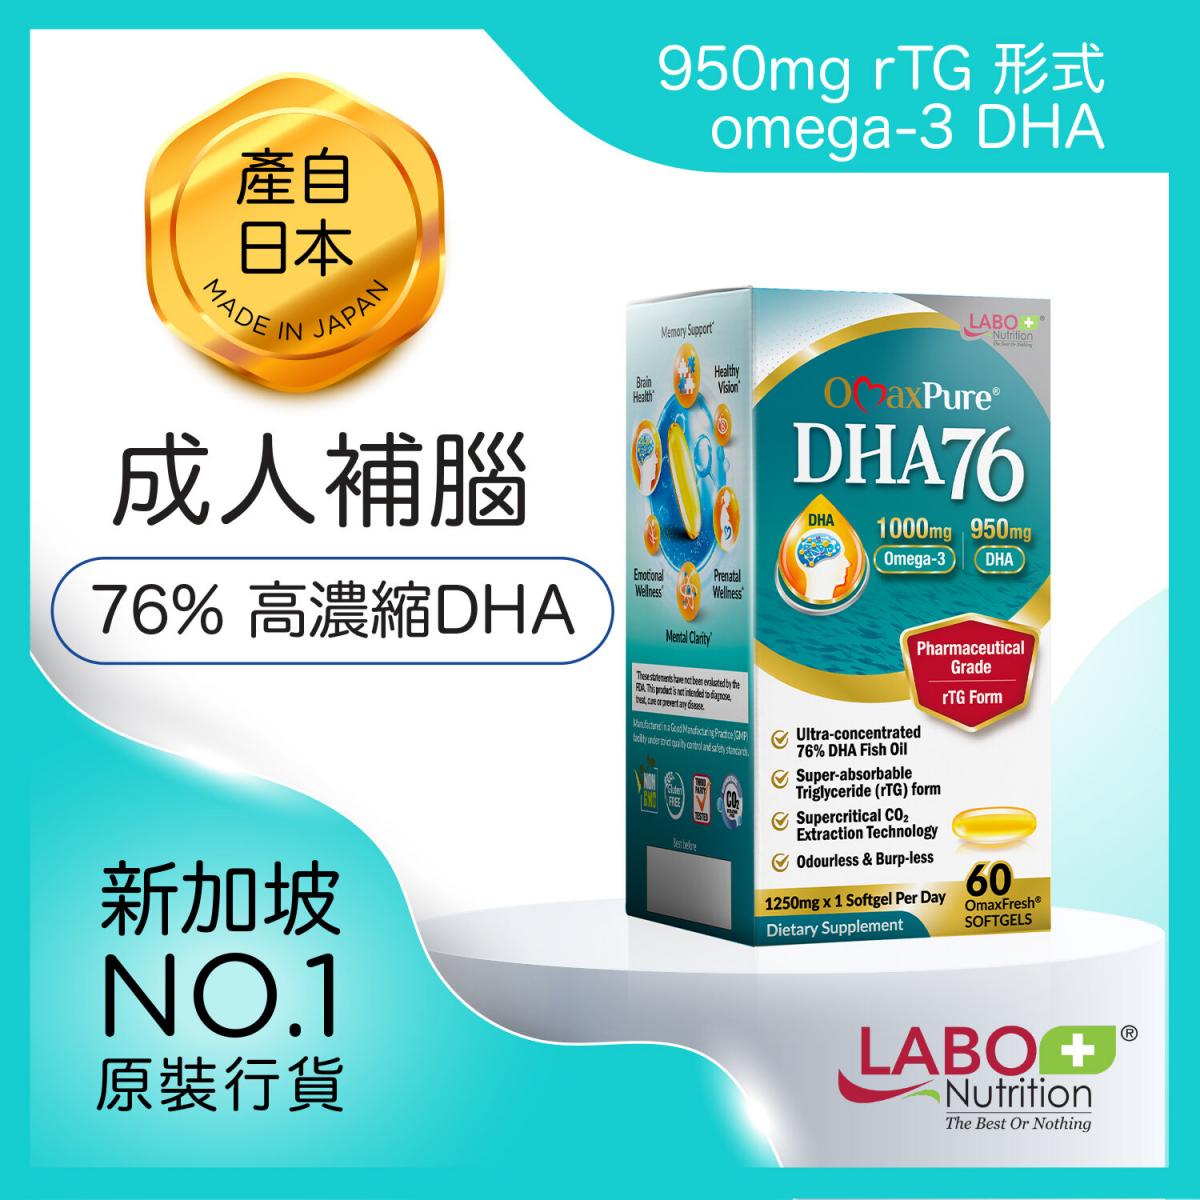 OmaxPure DHA76 - 醫藥級別魚油 | 76%高濃度DHA - (奧米茄3，補腦，健腦，視力，產前，記憶，Omega3) - 暂停补货，預計2.20有貨